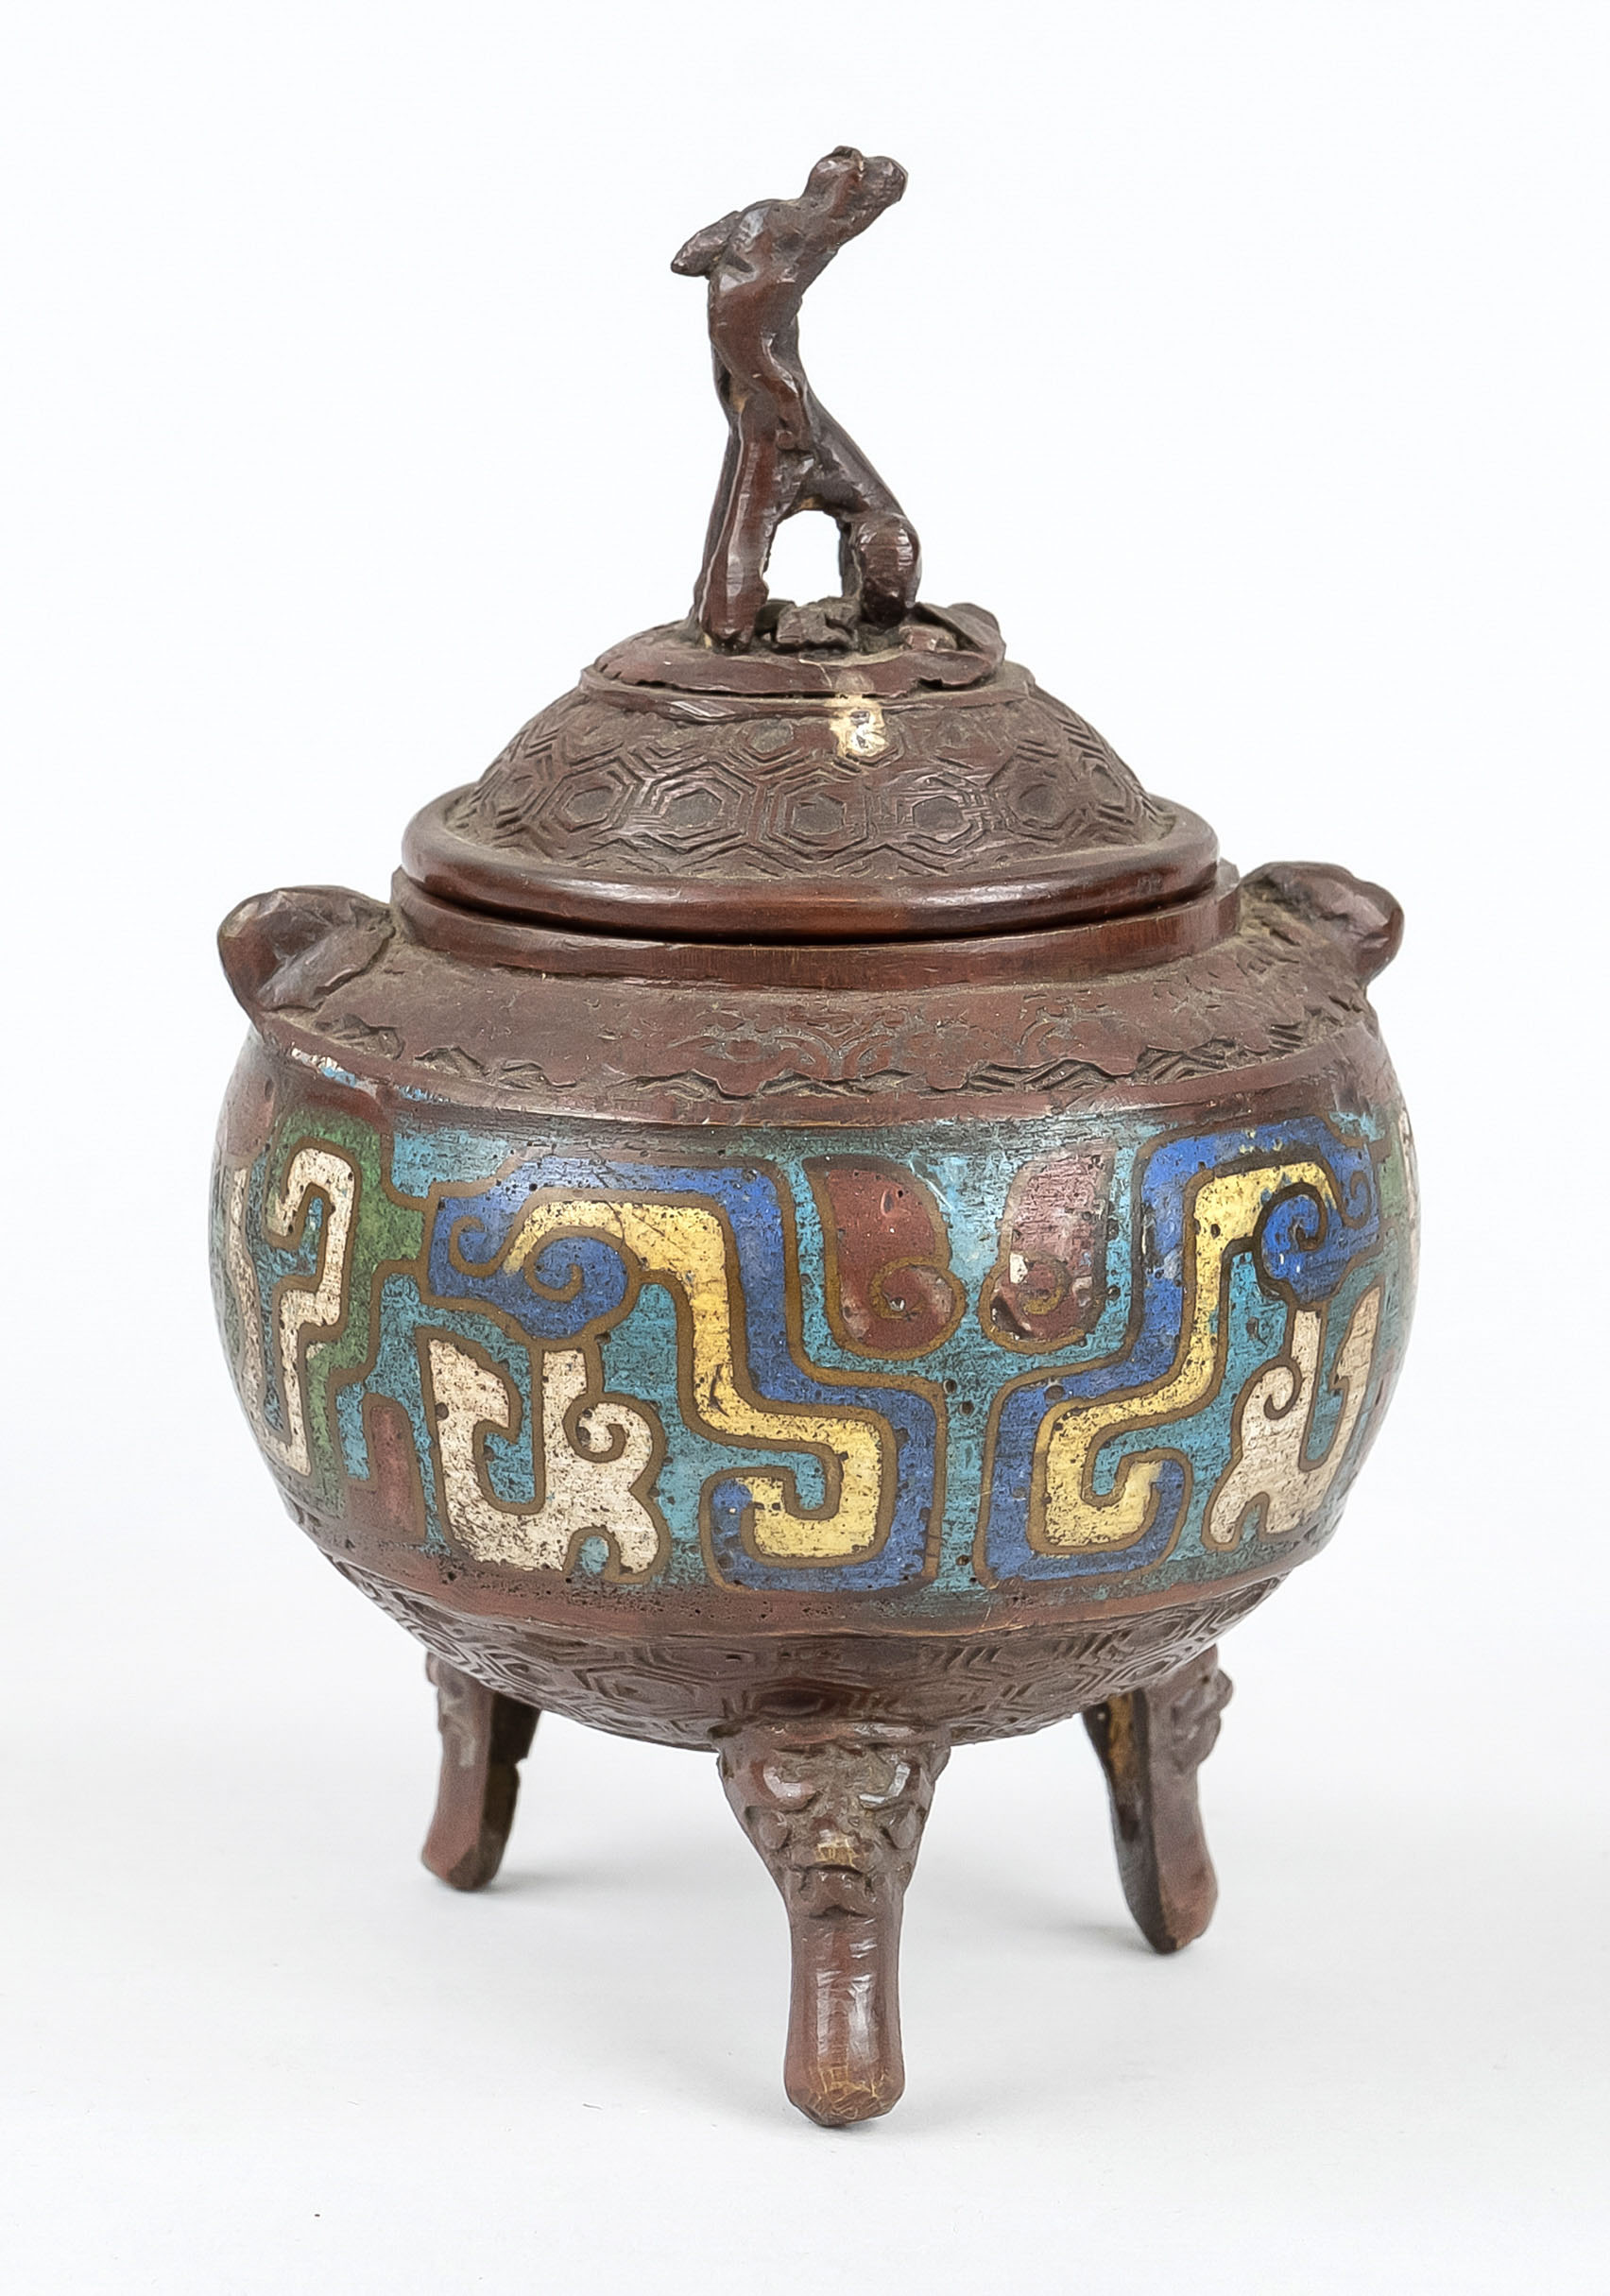 Incense burner type Ding, China, 20th century, bronze tripod archaic decoration, felid knob lid,